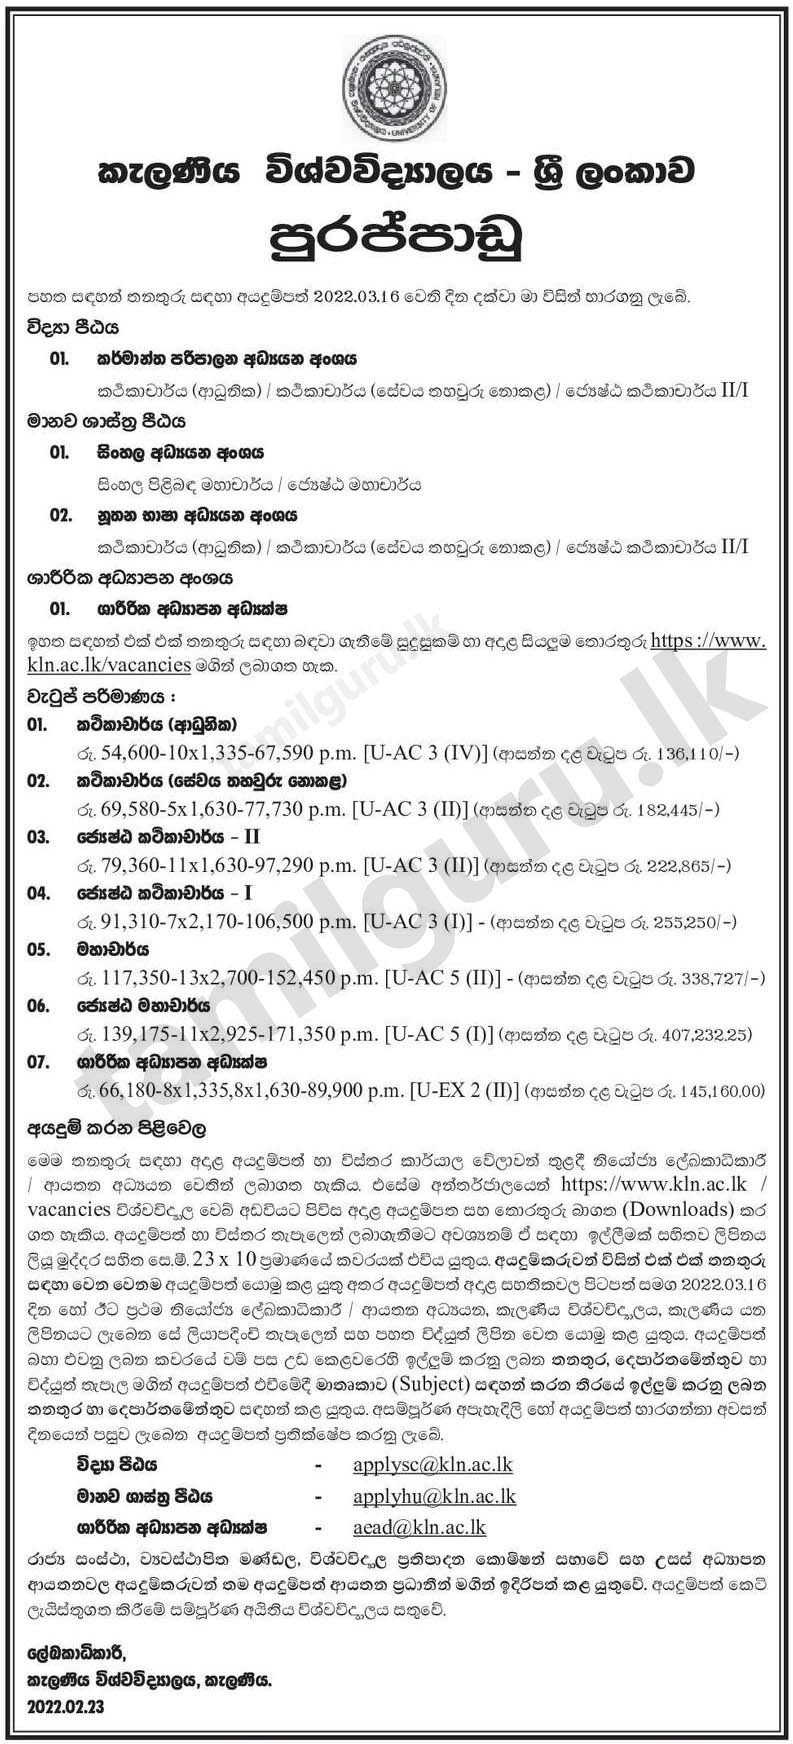 University of Kelaniya Vacancies 2022-02-25 (Lecturer (Probationary / Unconfirmed), Senior Lecturer, Professor, Senior Professor, Director in Physical Education) - Notice in Sinhala